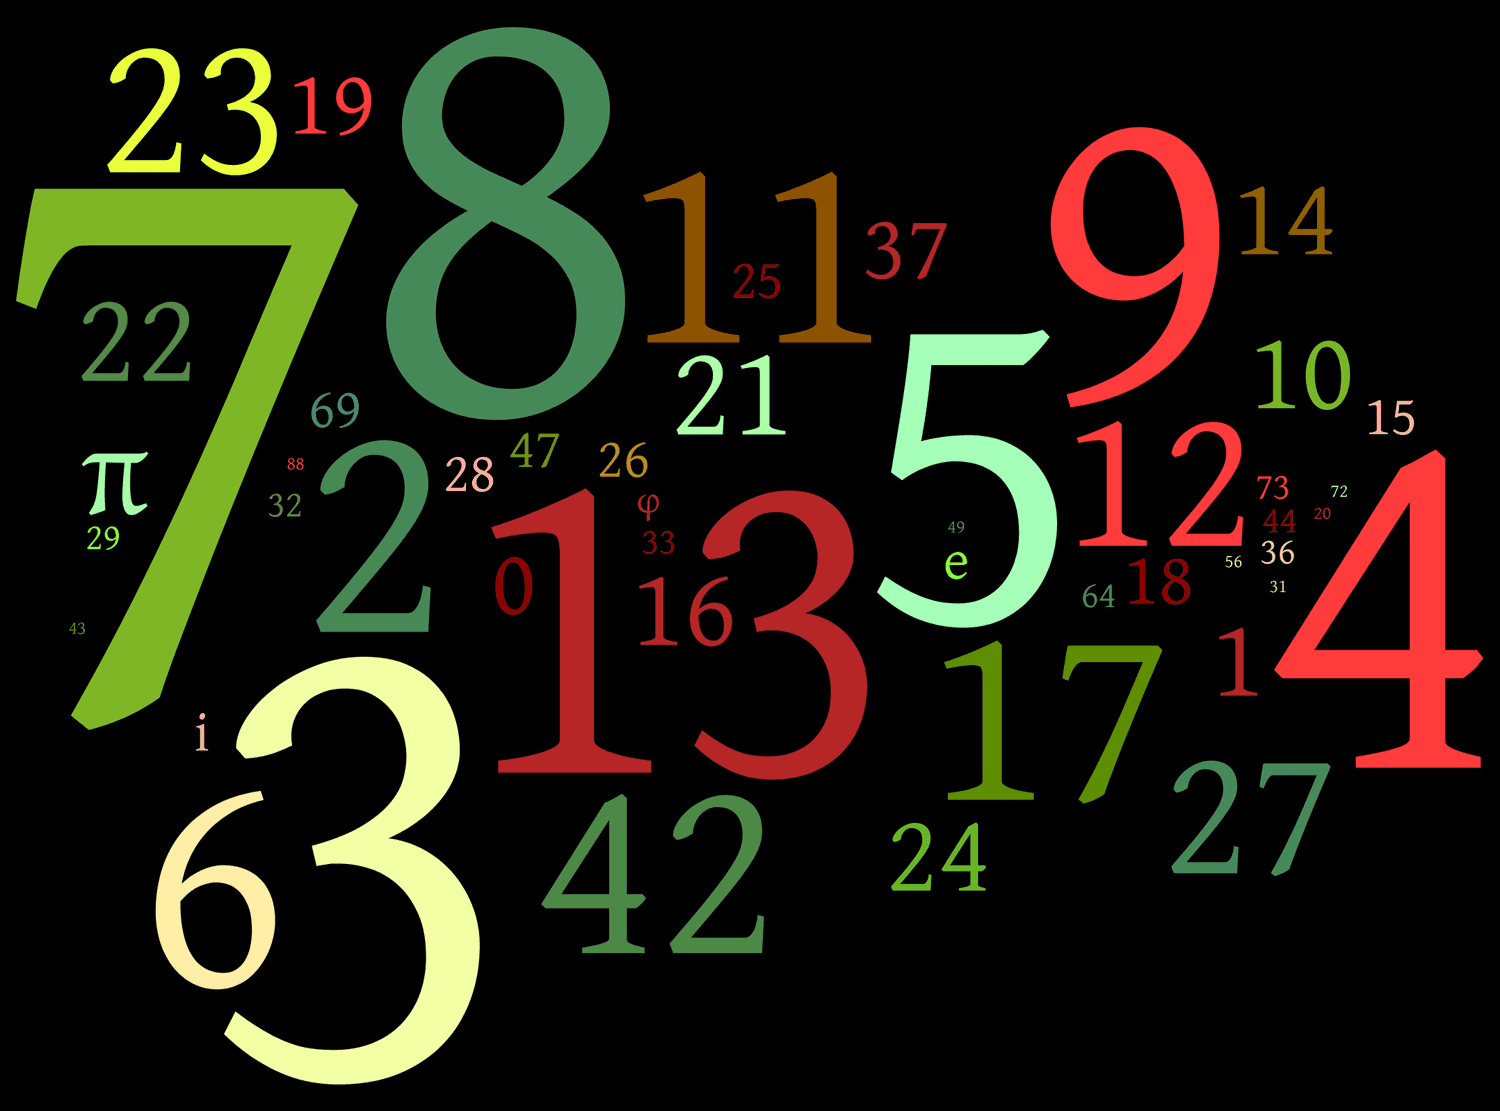 numerology